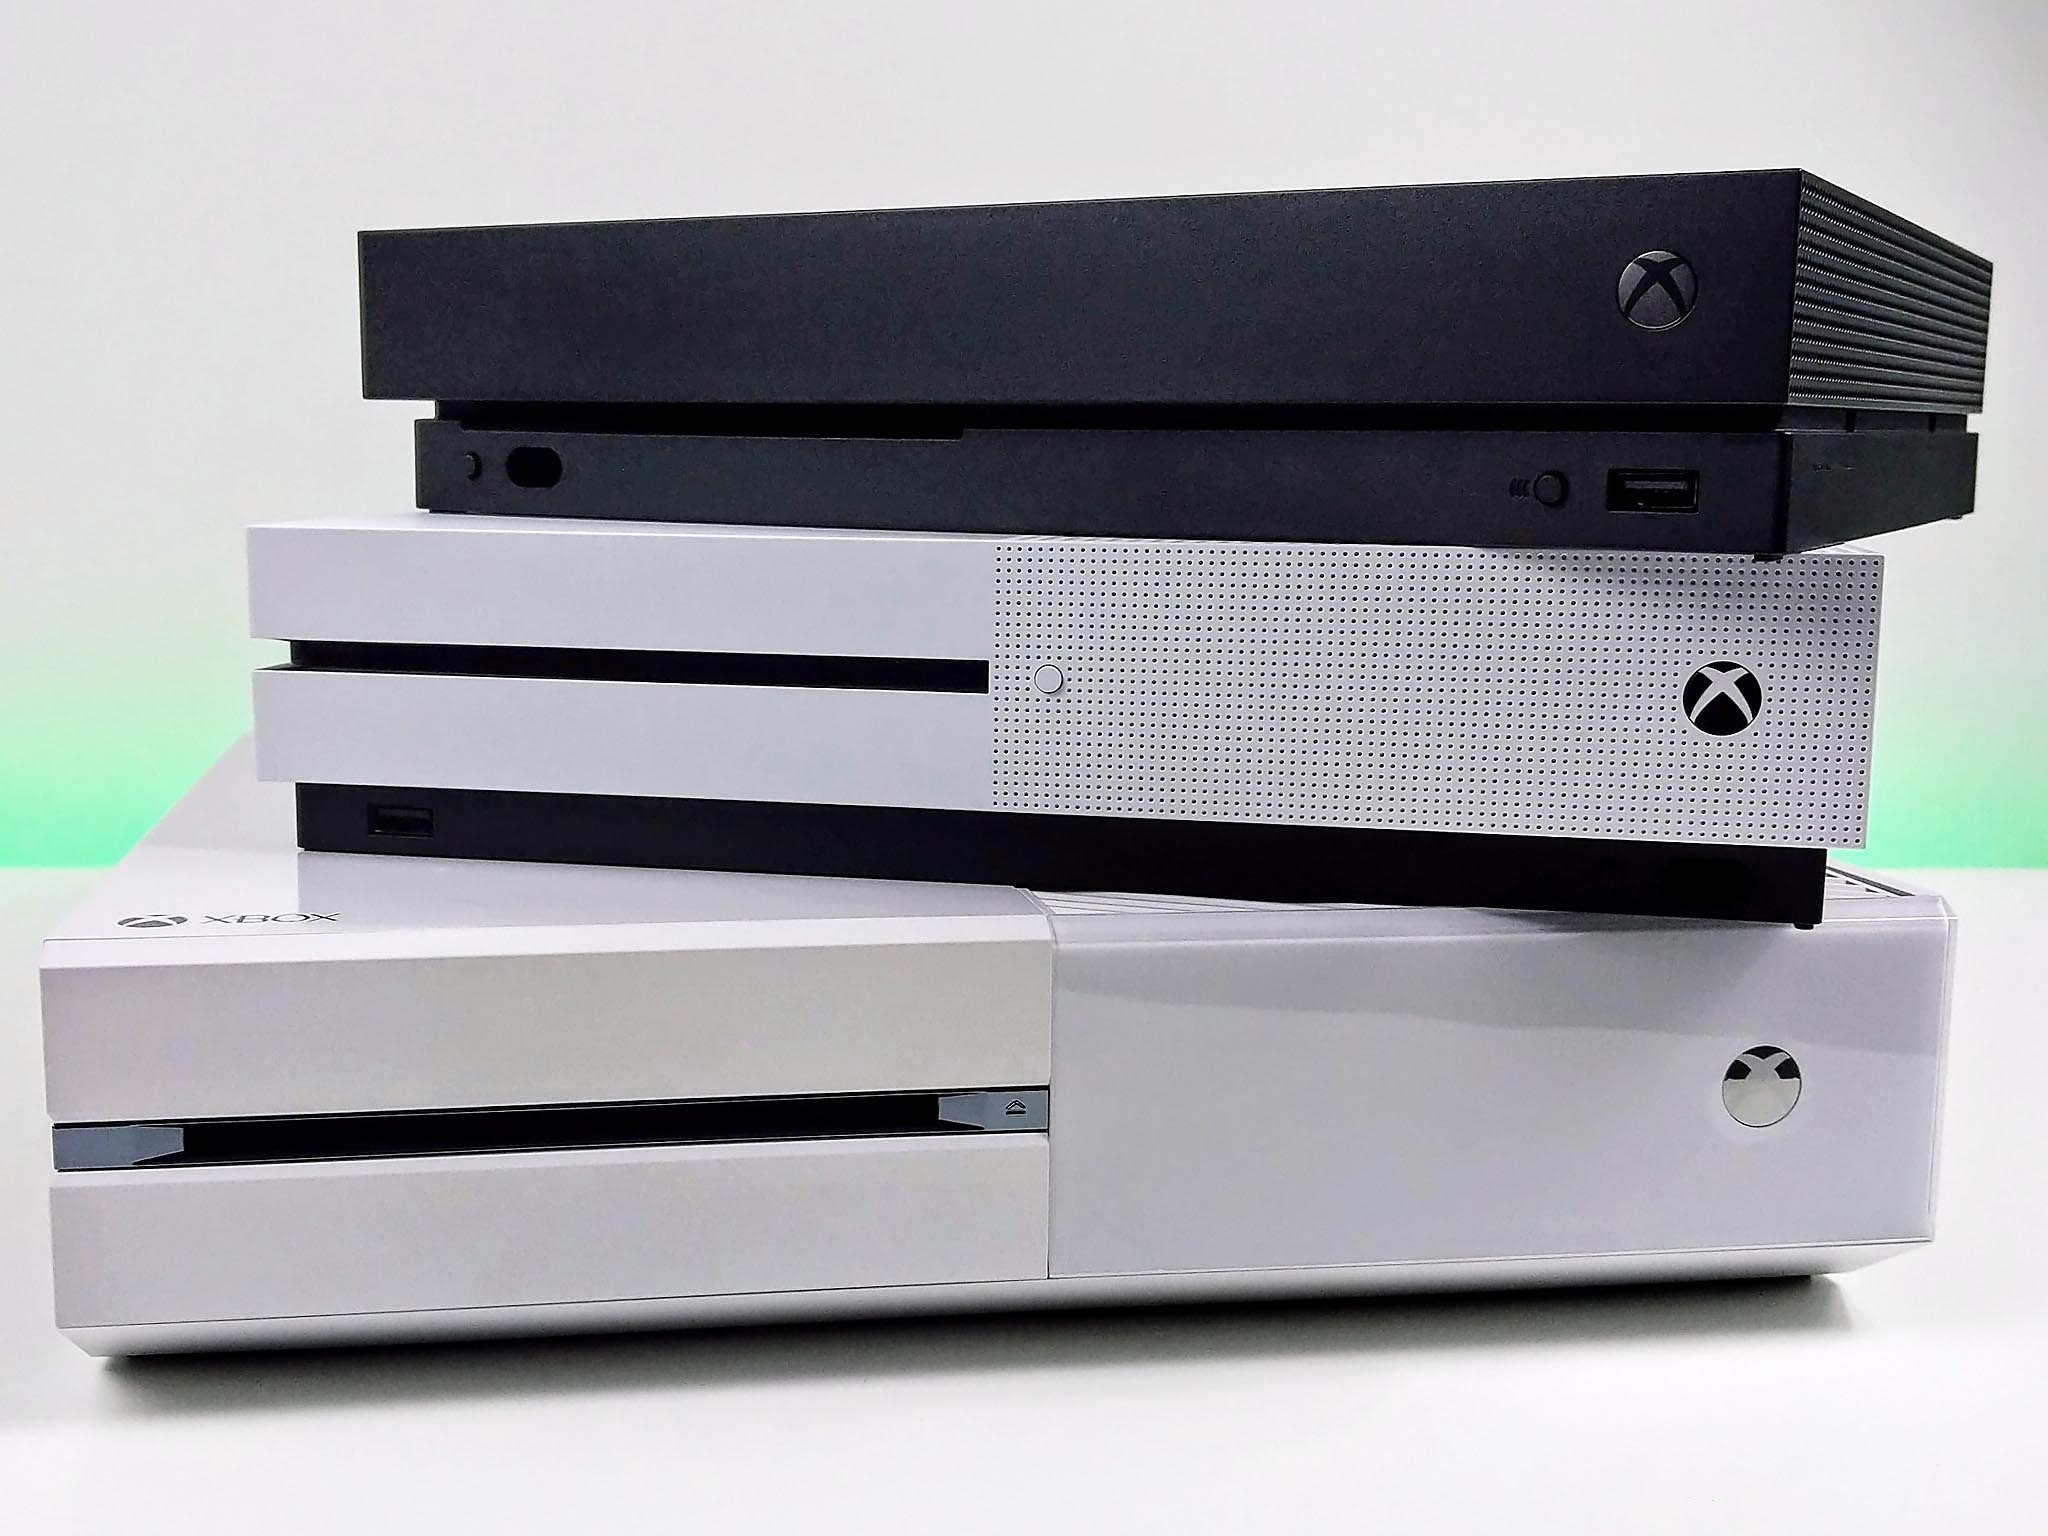 Microsoft No Longer Manufacturing Select Xbox One Models - Gameranx